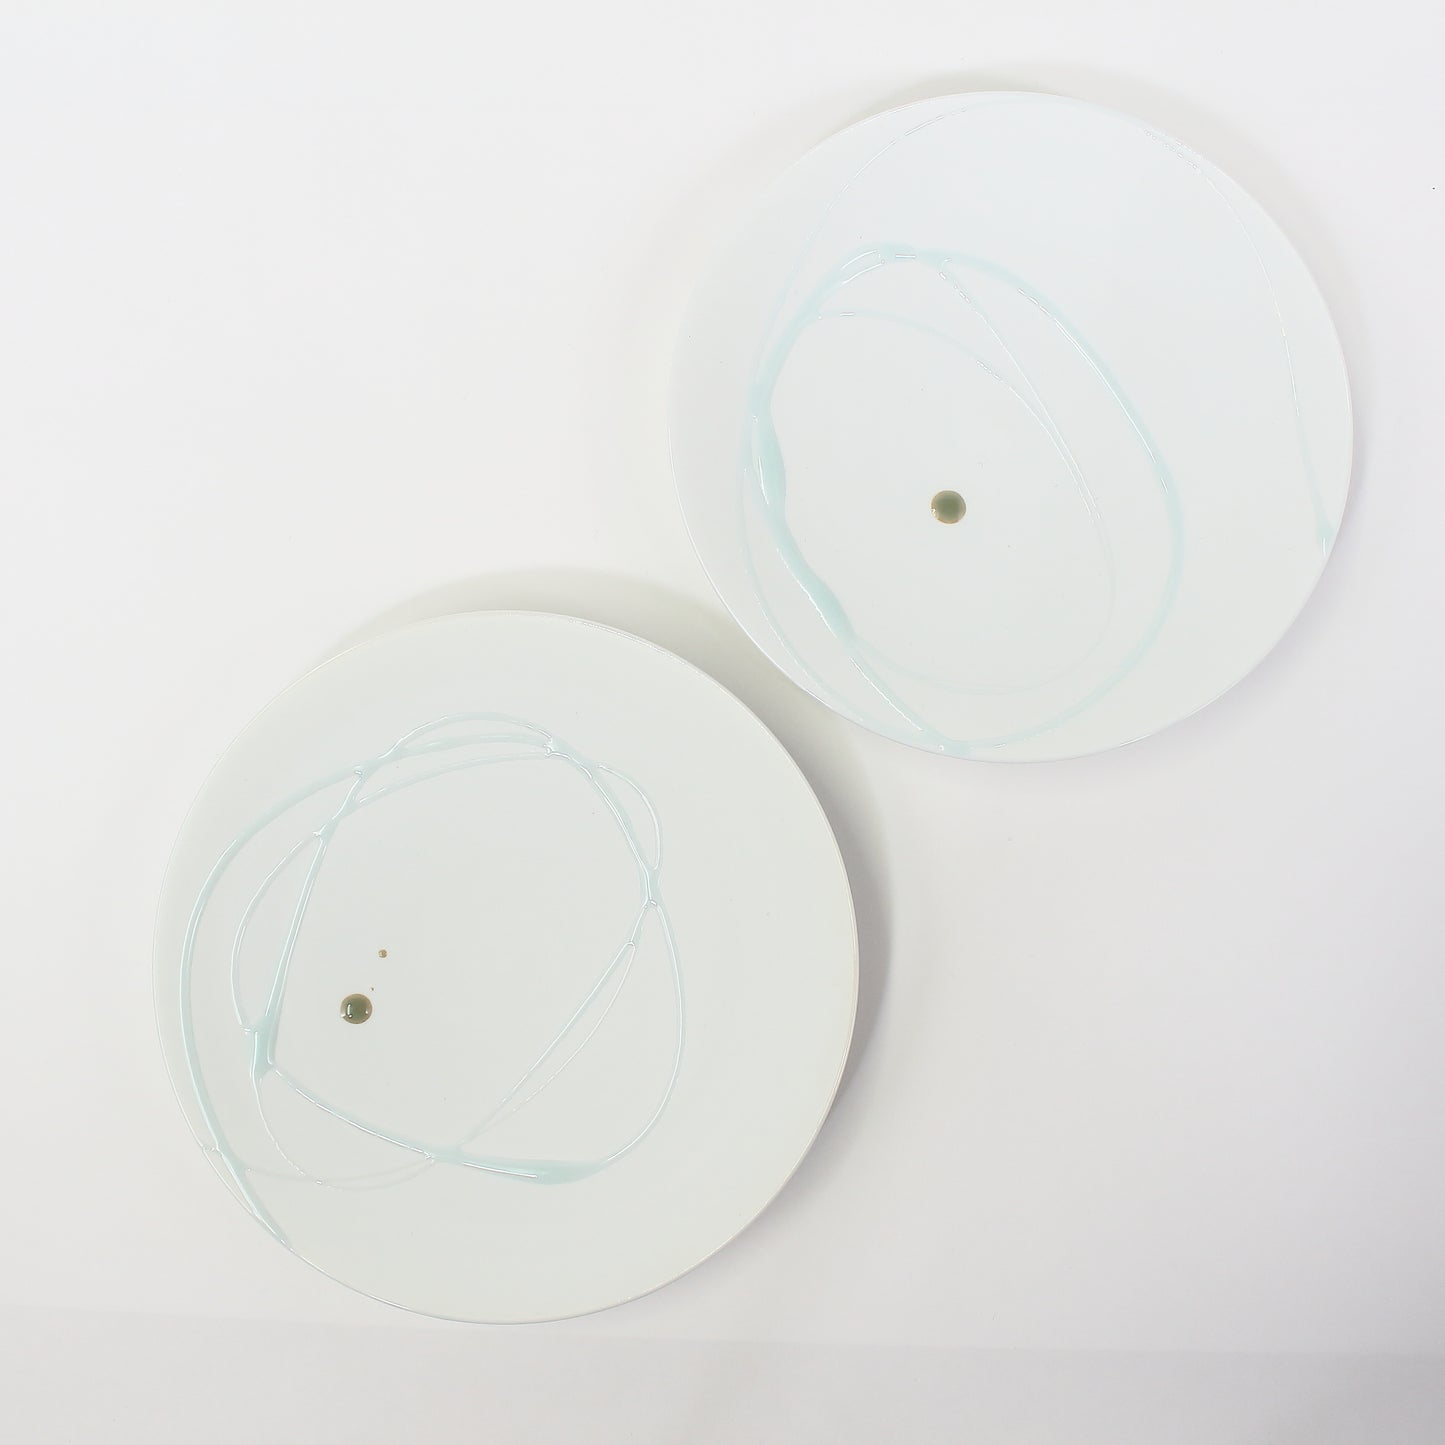 Arita ware | Akio Momota |  coloration plate set of 2